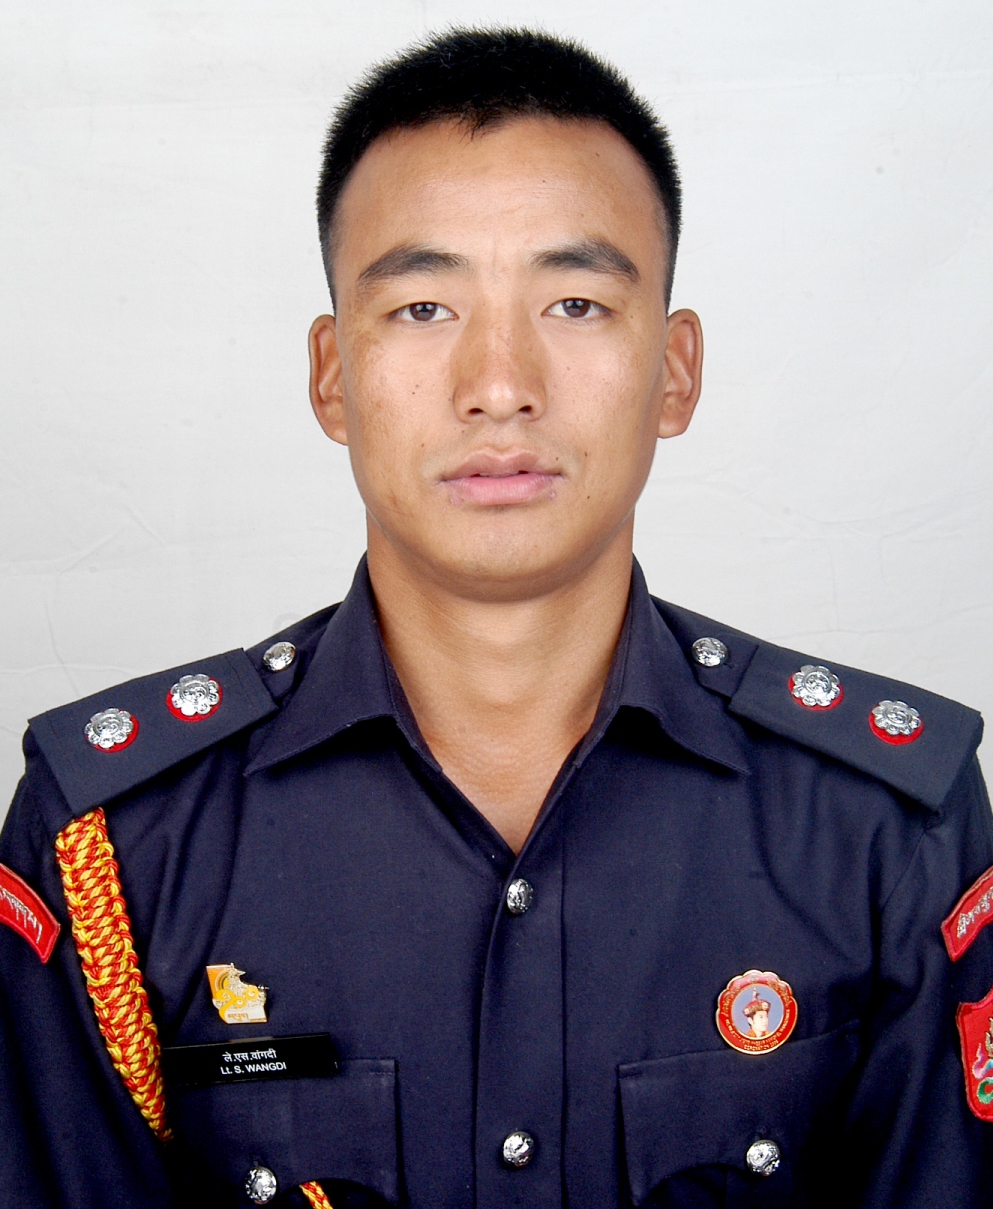 Lt. Singay Wangdi